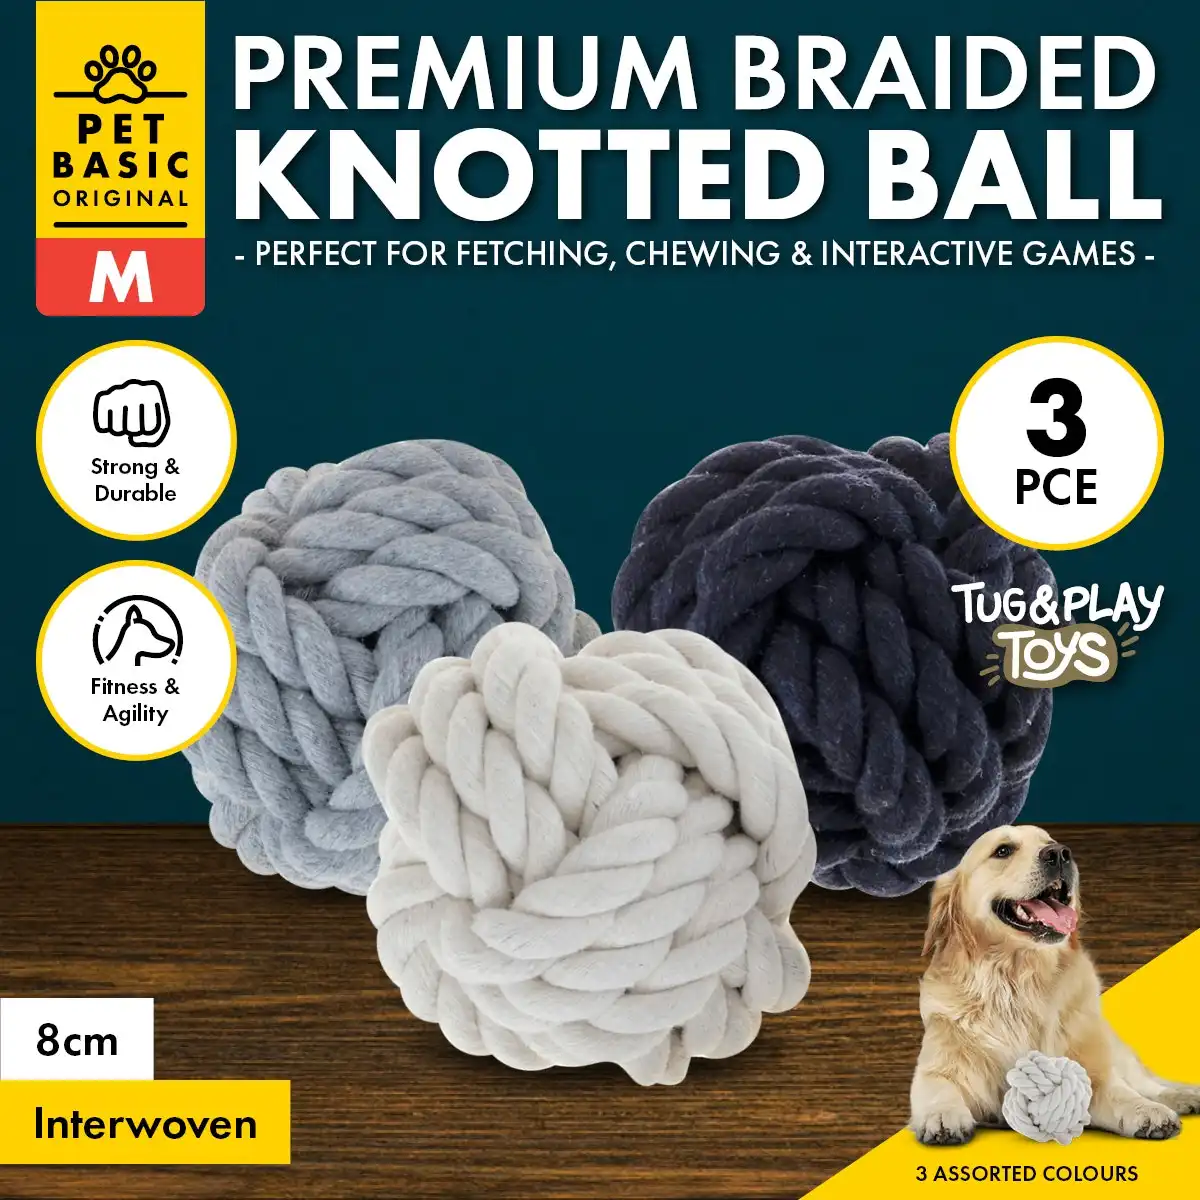 Pet Basic® 3PCE Premium Braided Knotted Ball Size Medium Natural Fibres 8cm